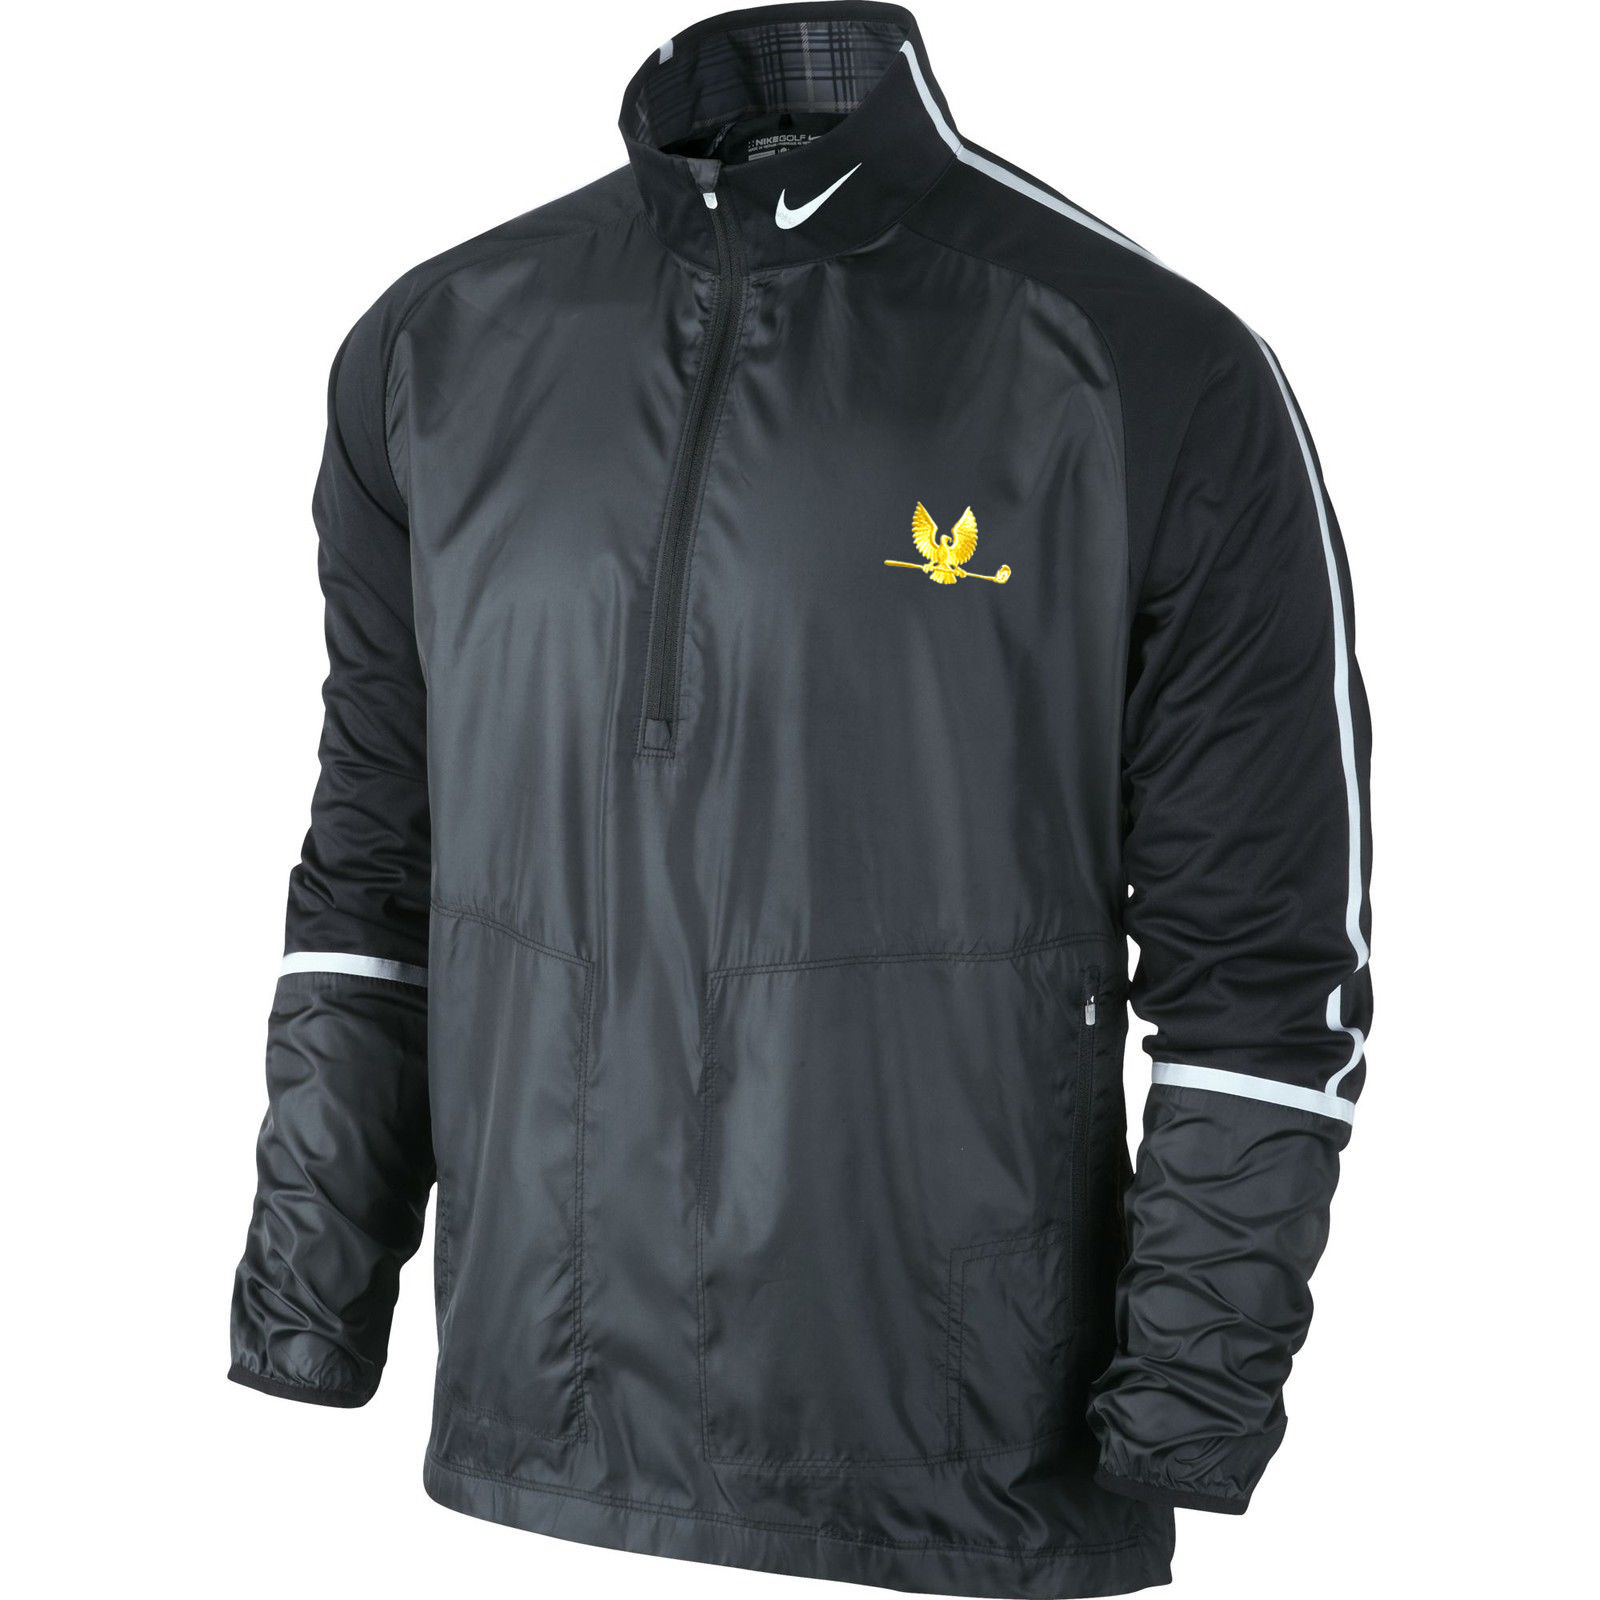 New Nike Golf 1/2 Zip Pullover/Wind Jacket COLOR: Black SIZE: Medium | eBay